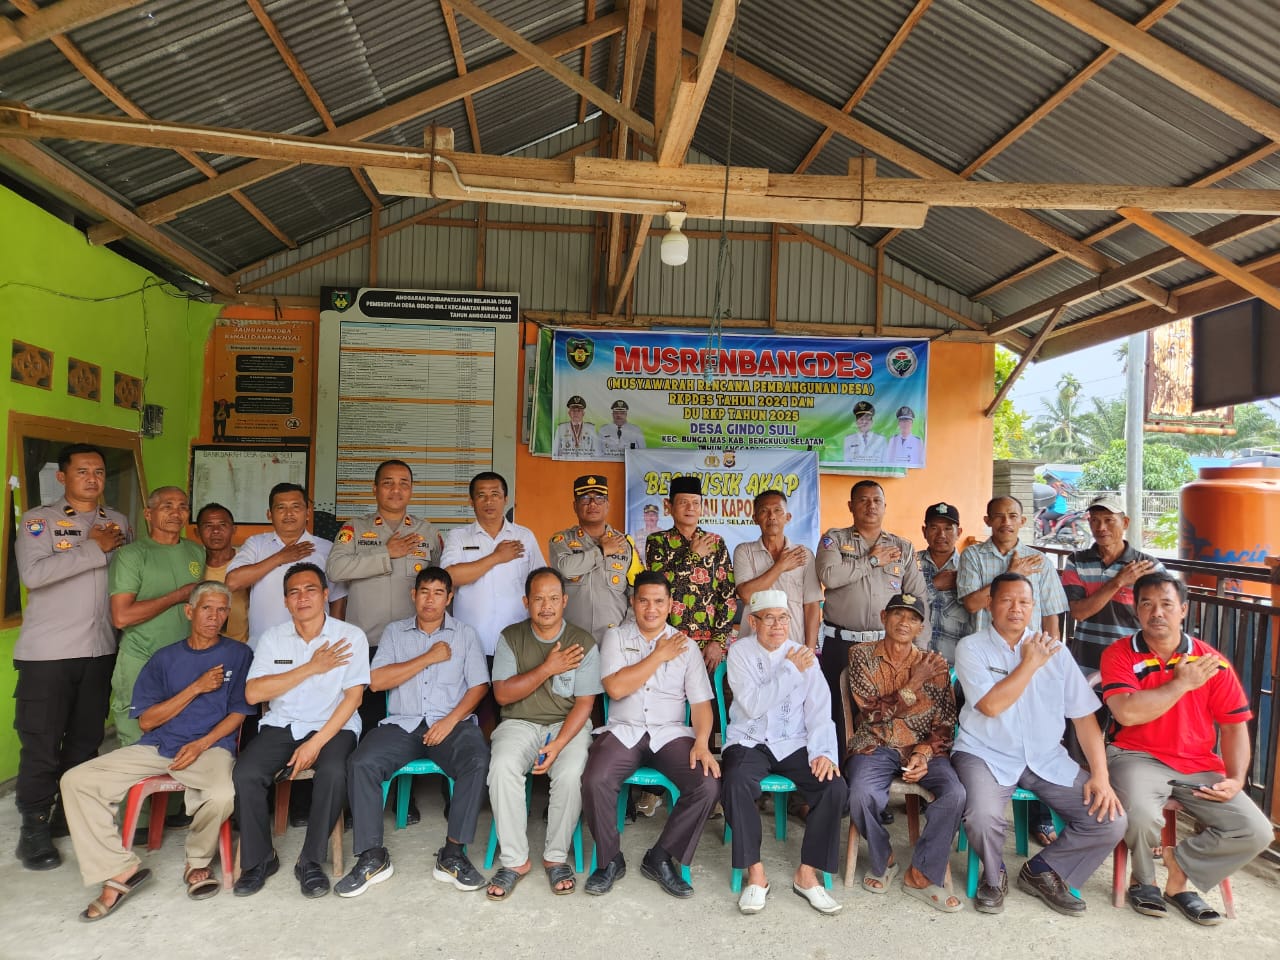 Beghusik Akap Besamau Kapolres di Desa Gindosuli Kecamatan Bungamas Kab. Bengkulu Selatan